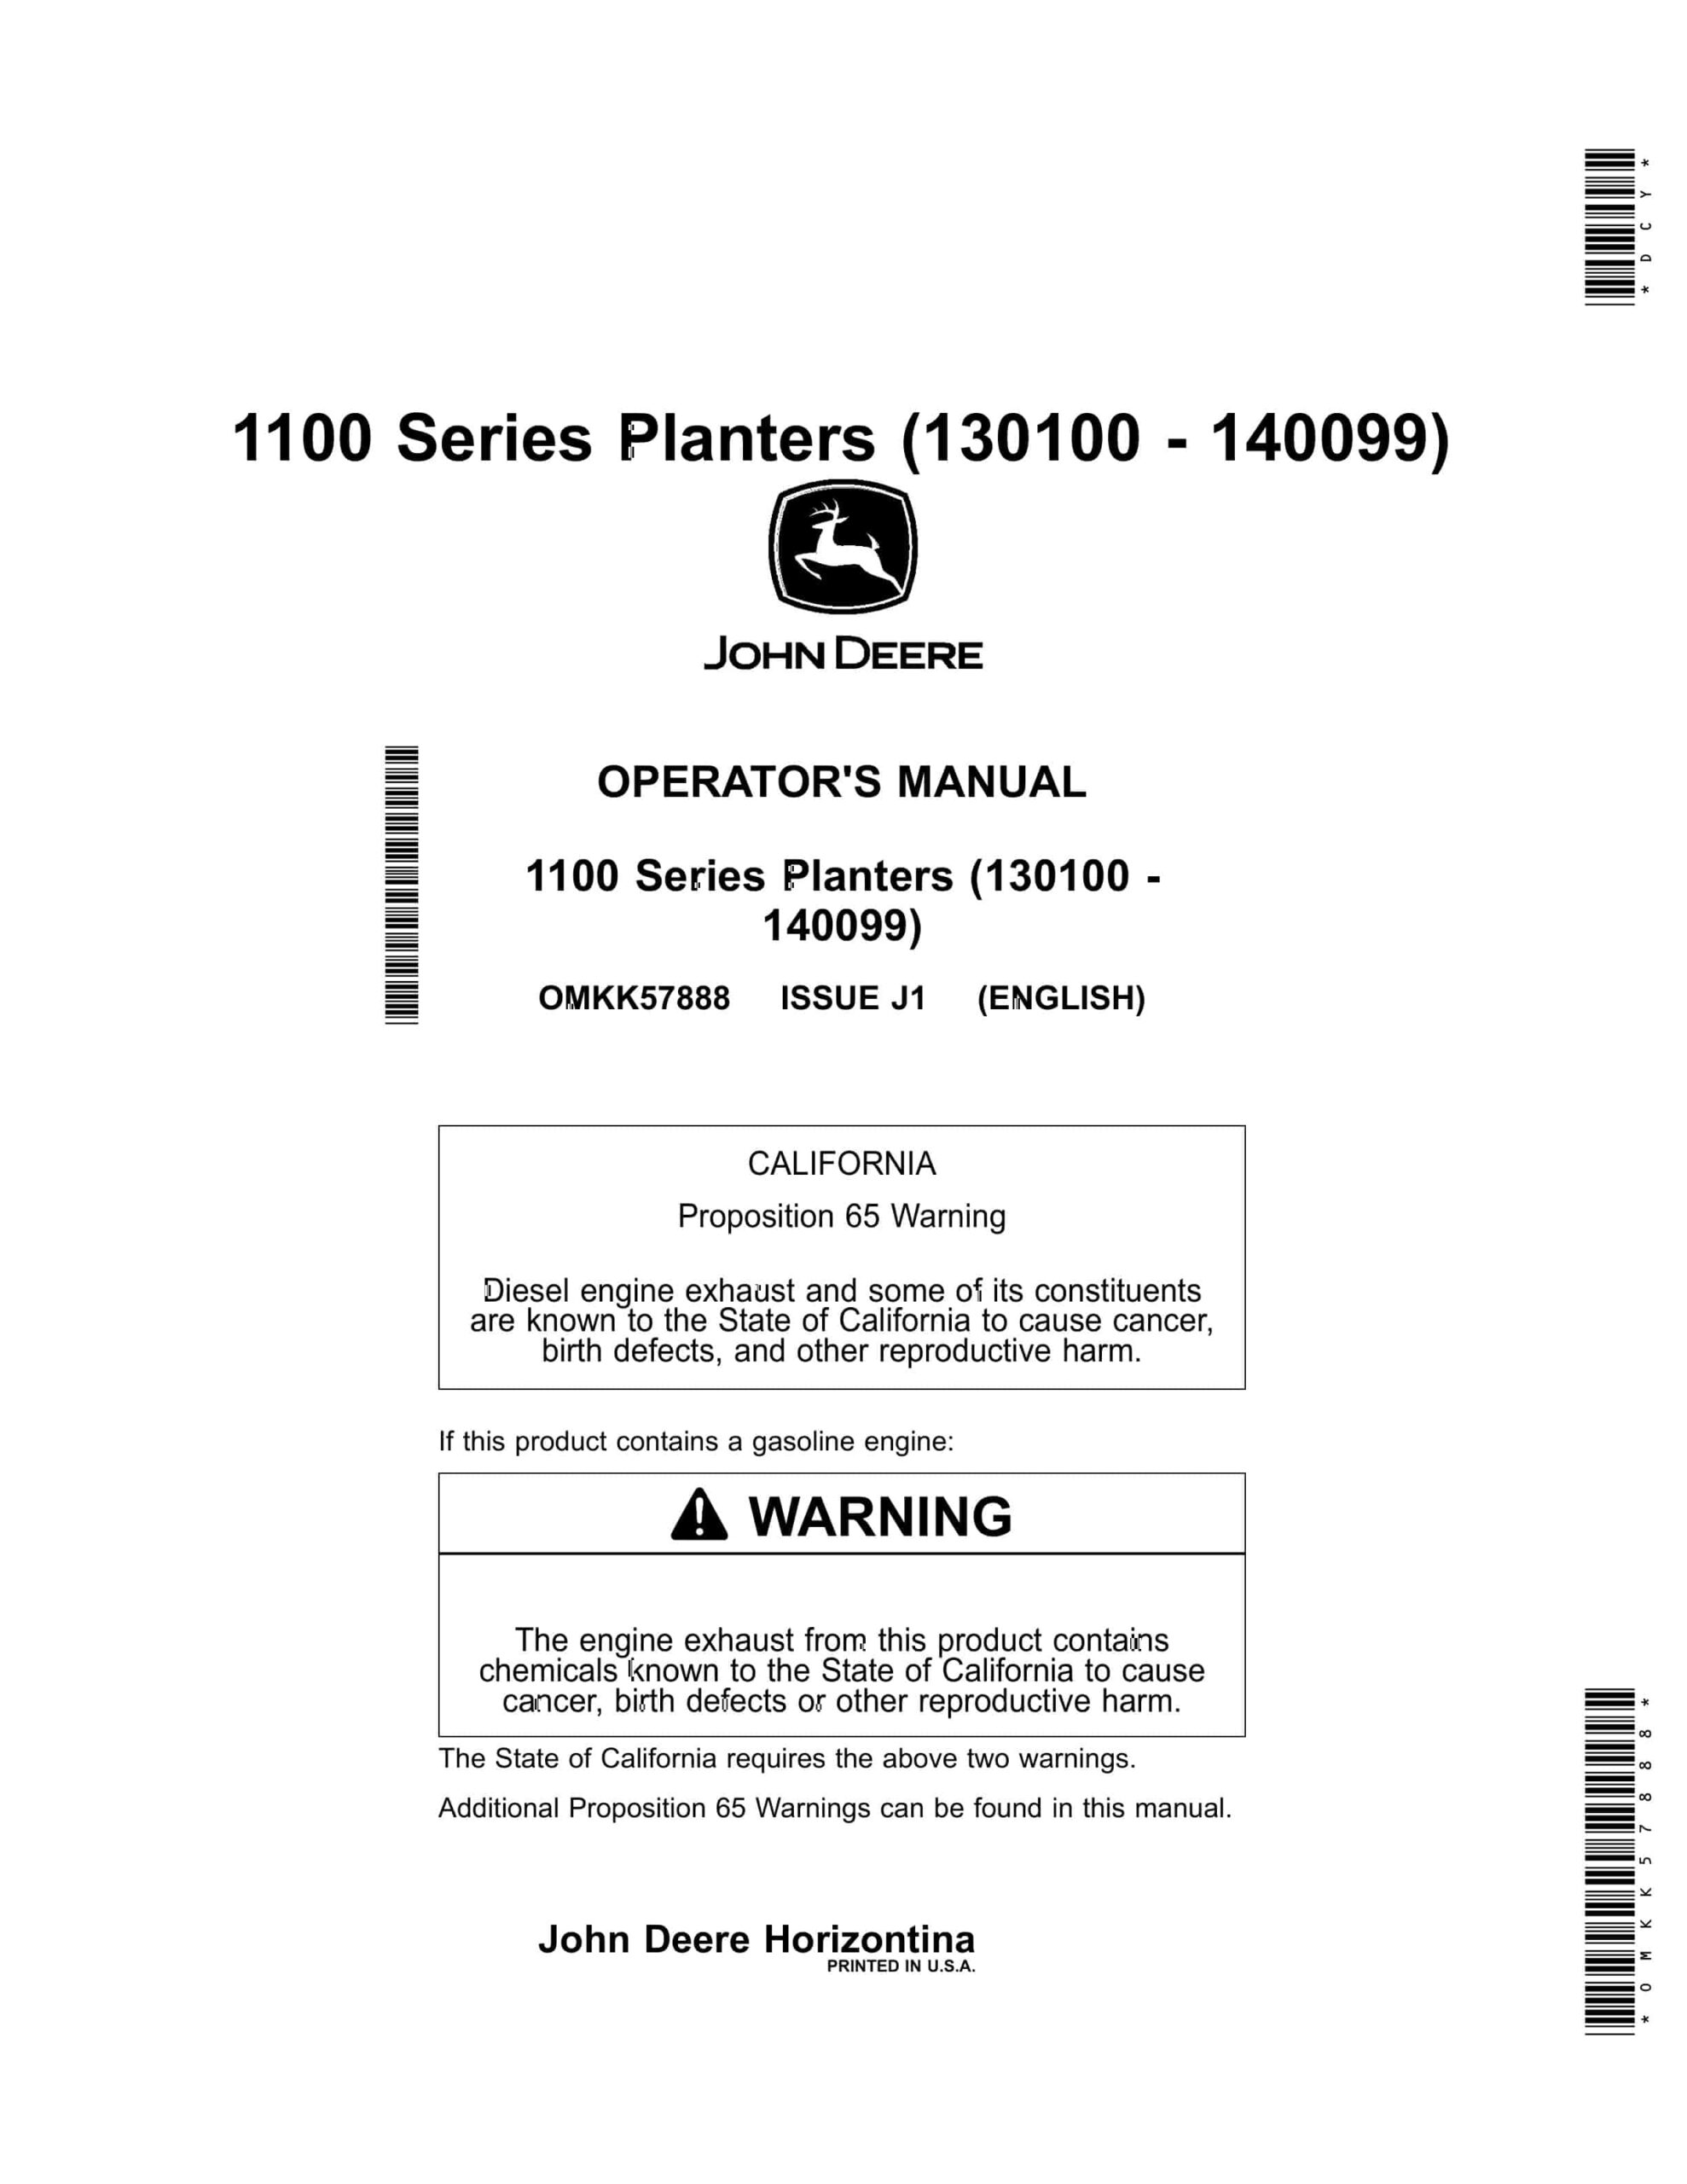 John Deere 1100 Series Planter Operator Manual OMKK57888-1